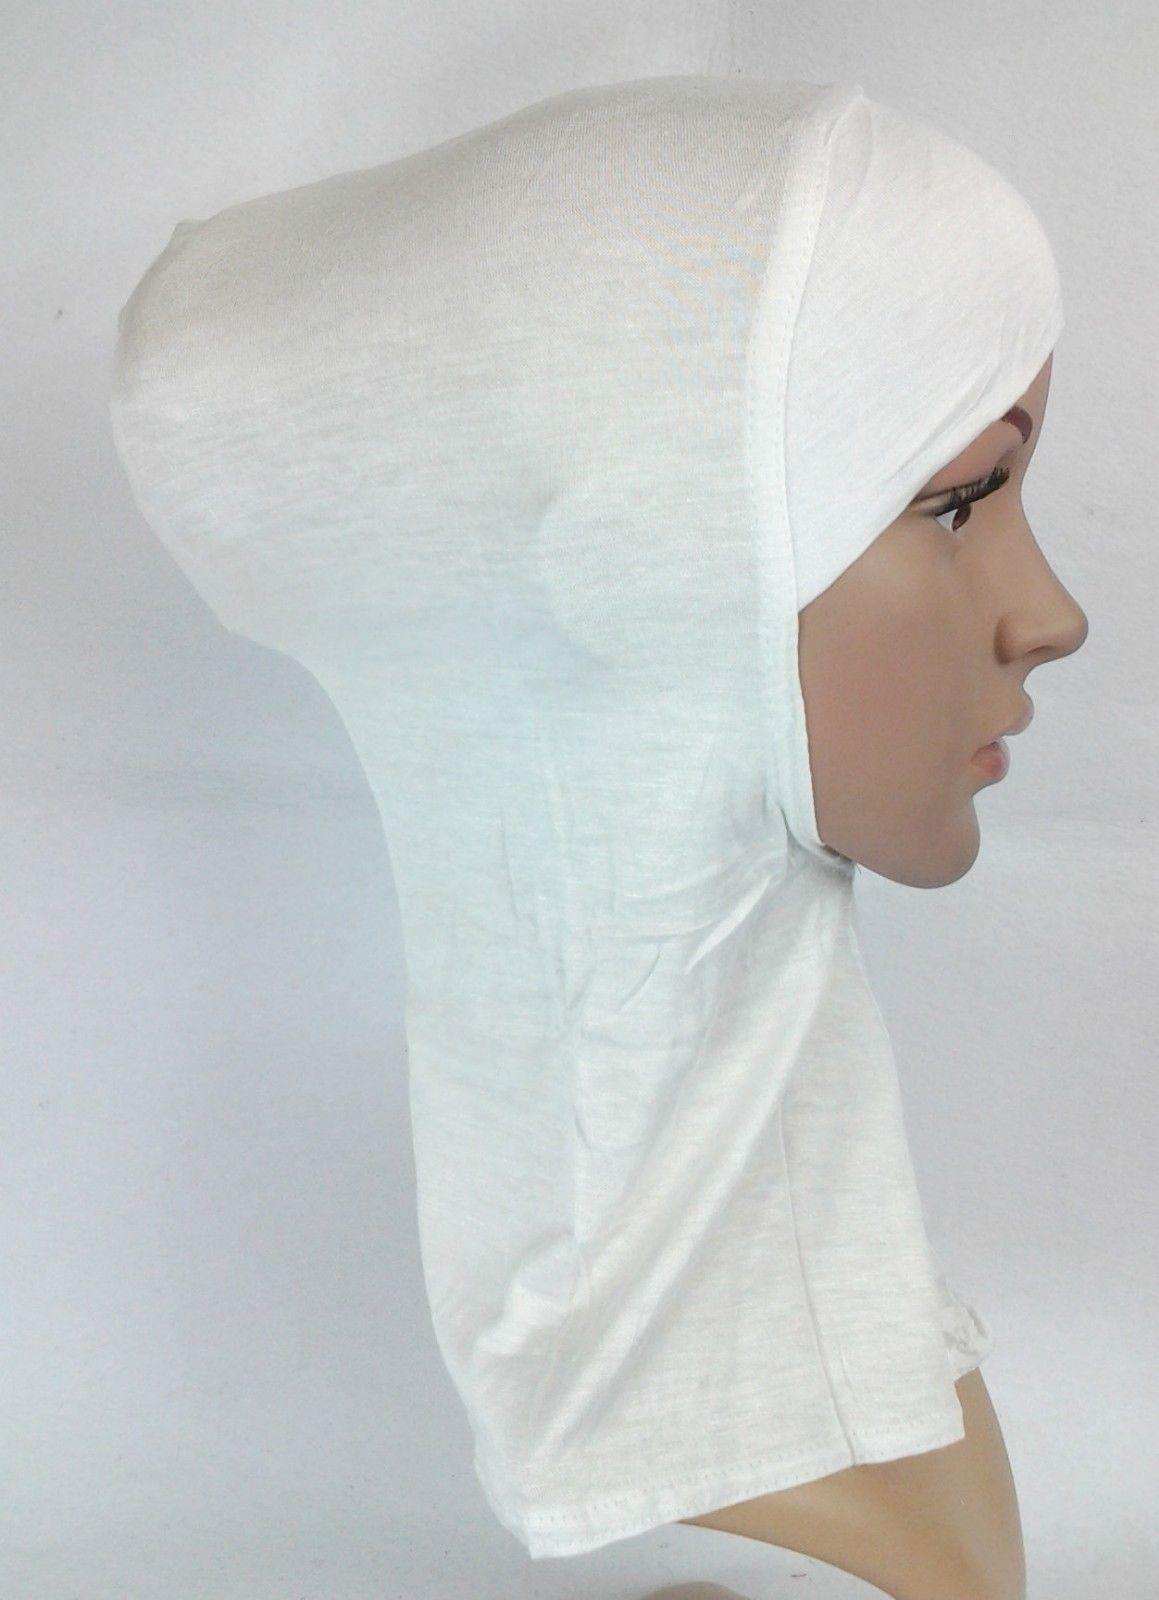 Women's Under Scarf Hat Cap Bone Bonnet Hijab Islamic Neck Cover Muslim - Arabian Shopping Zone